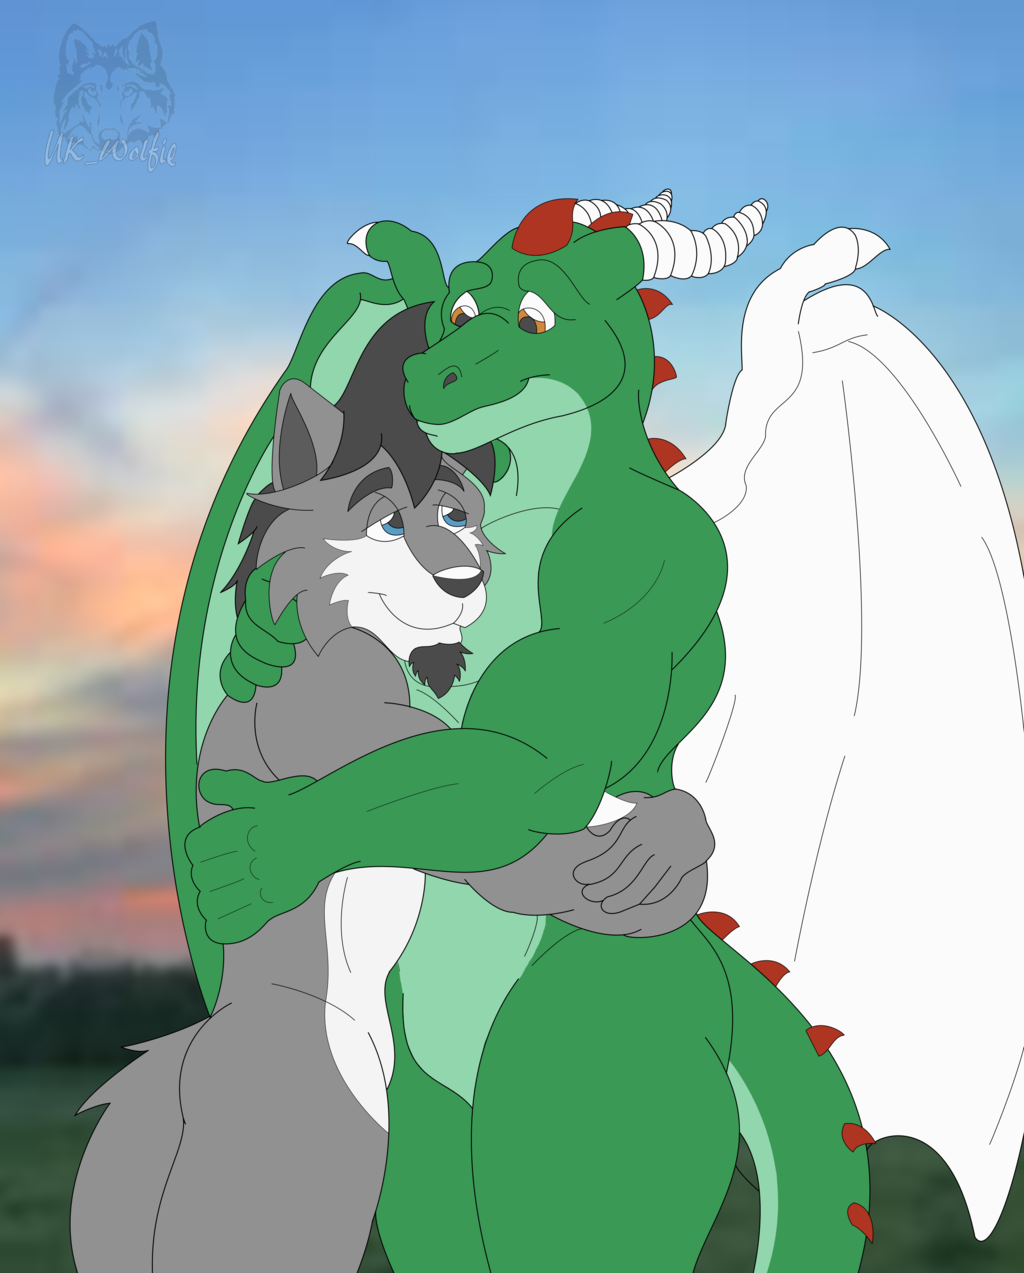 Dragon hugs make things better